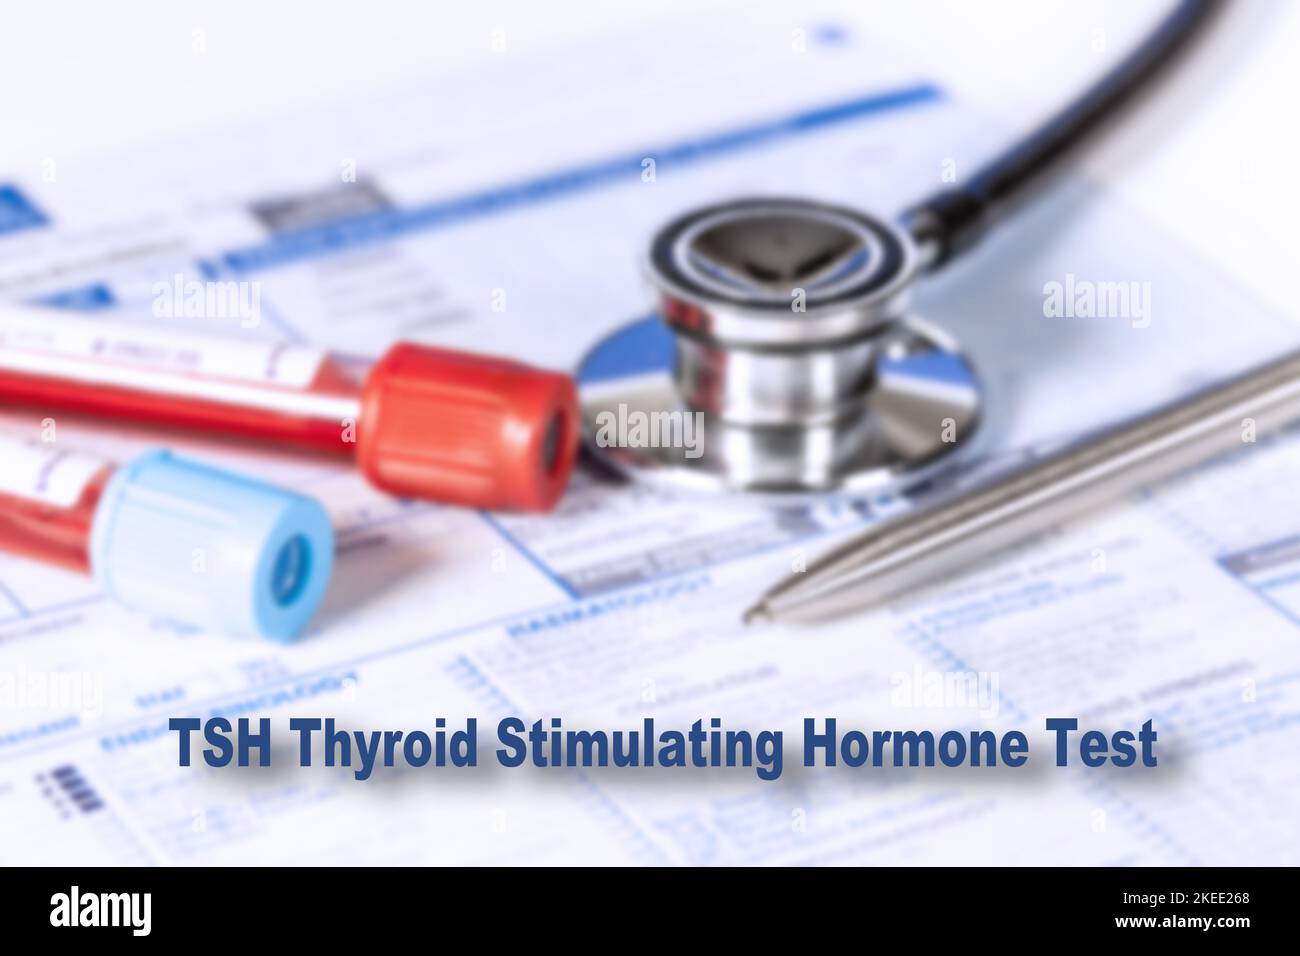 Prueba de hormona estimulante de tiroides, imagen conceptual Foto de stock